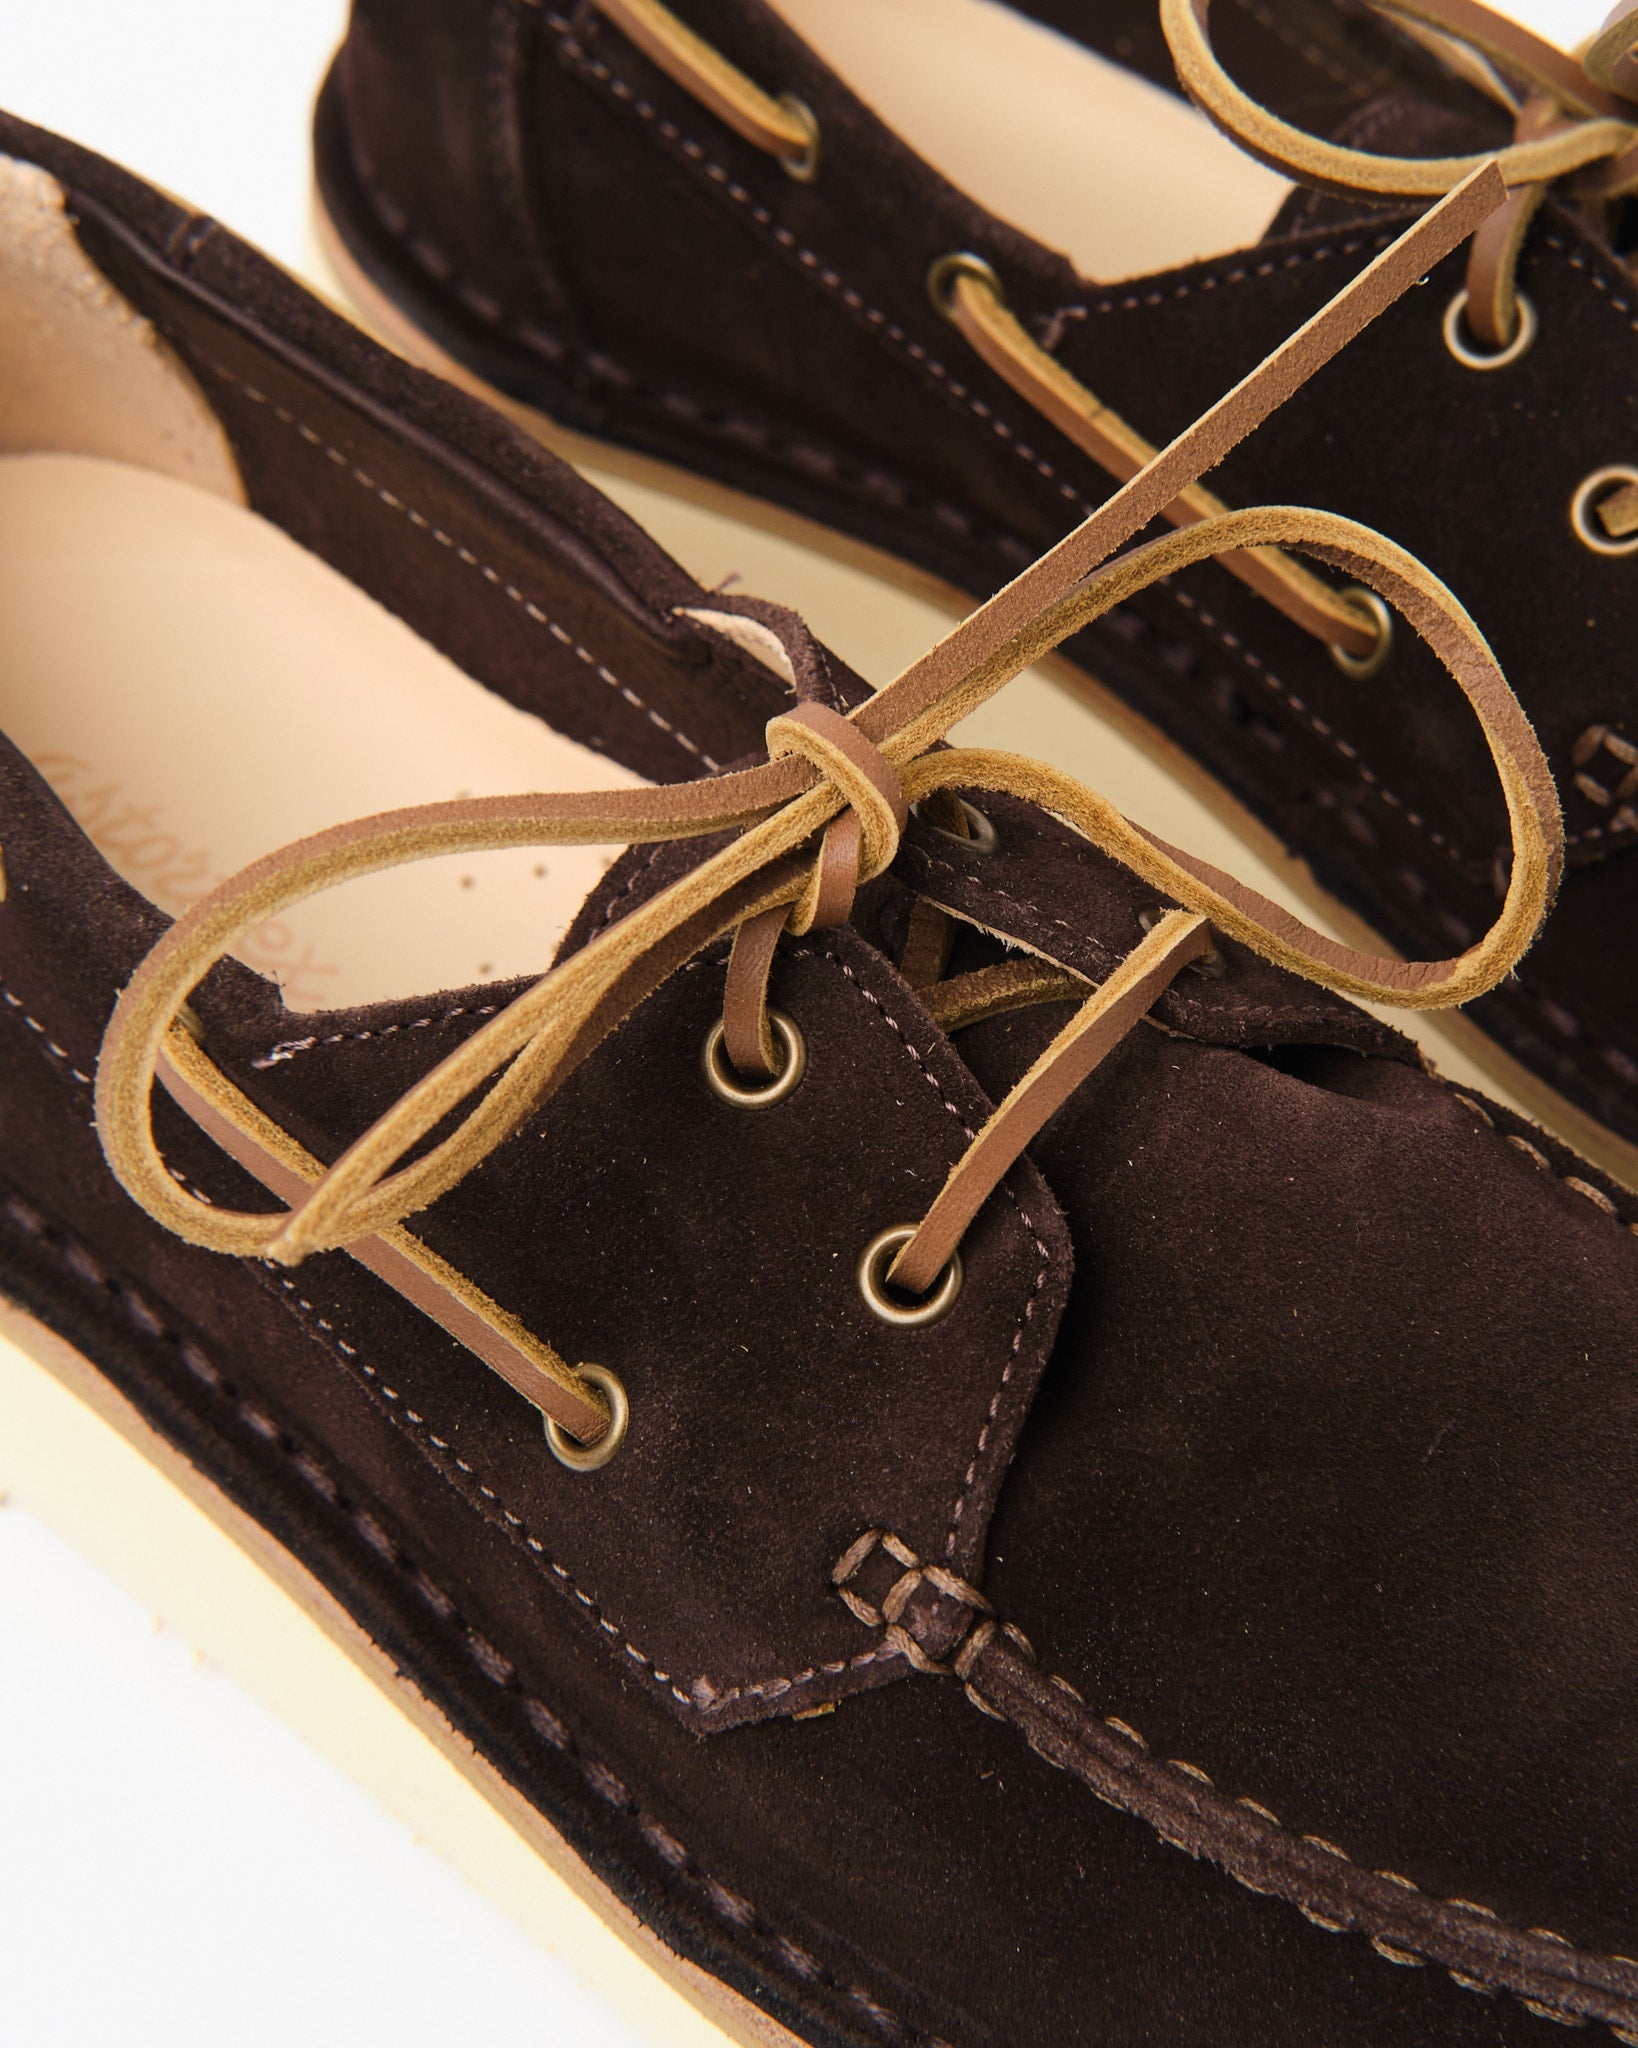 Boatflex Shoes Dark Chestnut - Meadow